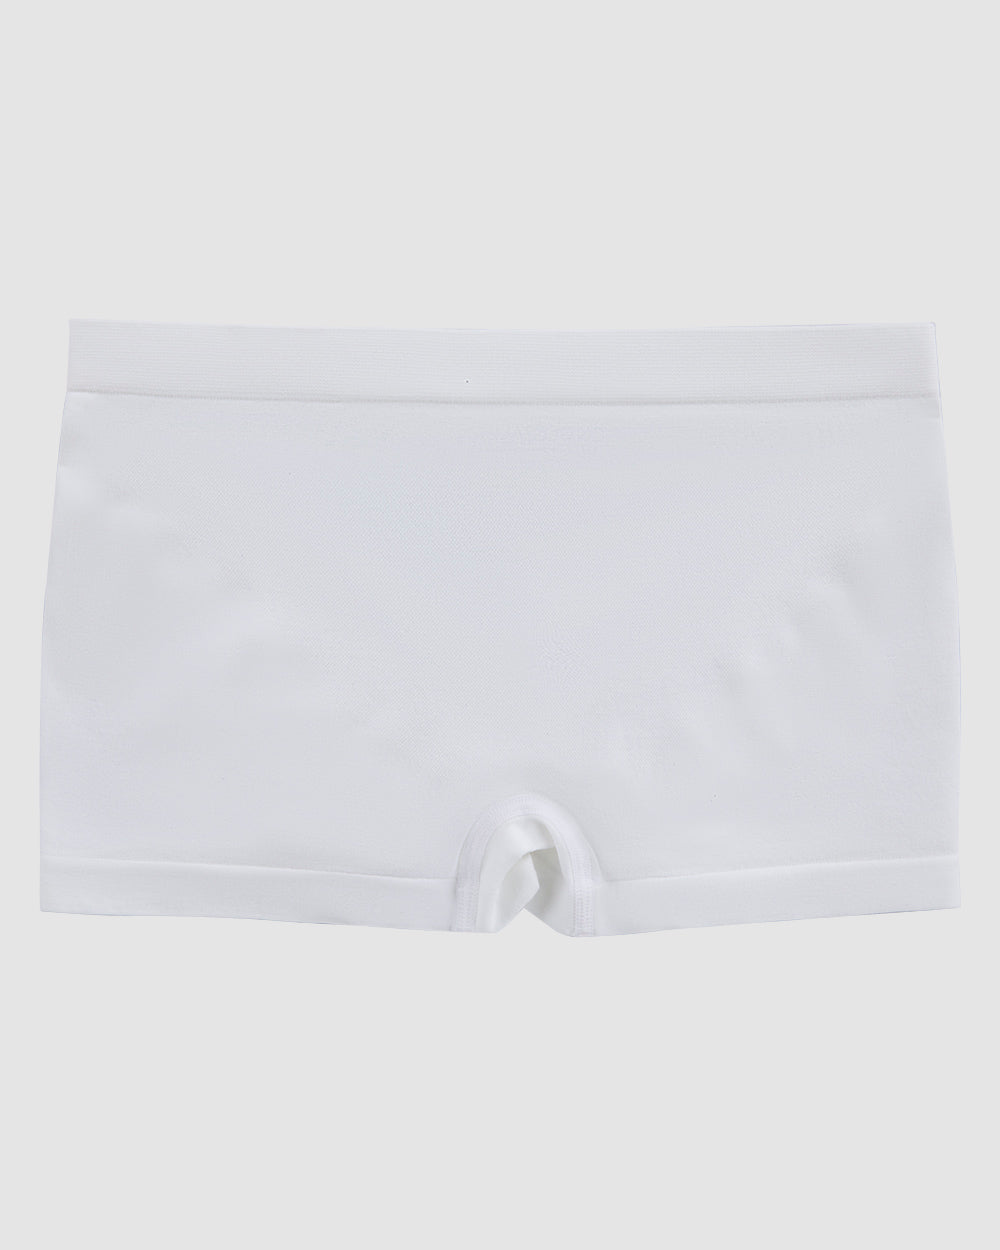 A lady wearing white Cabana Cotton Seamless Boyshort Underwear